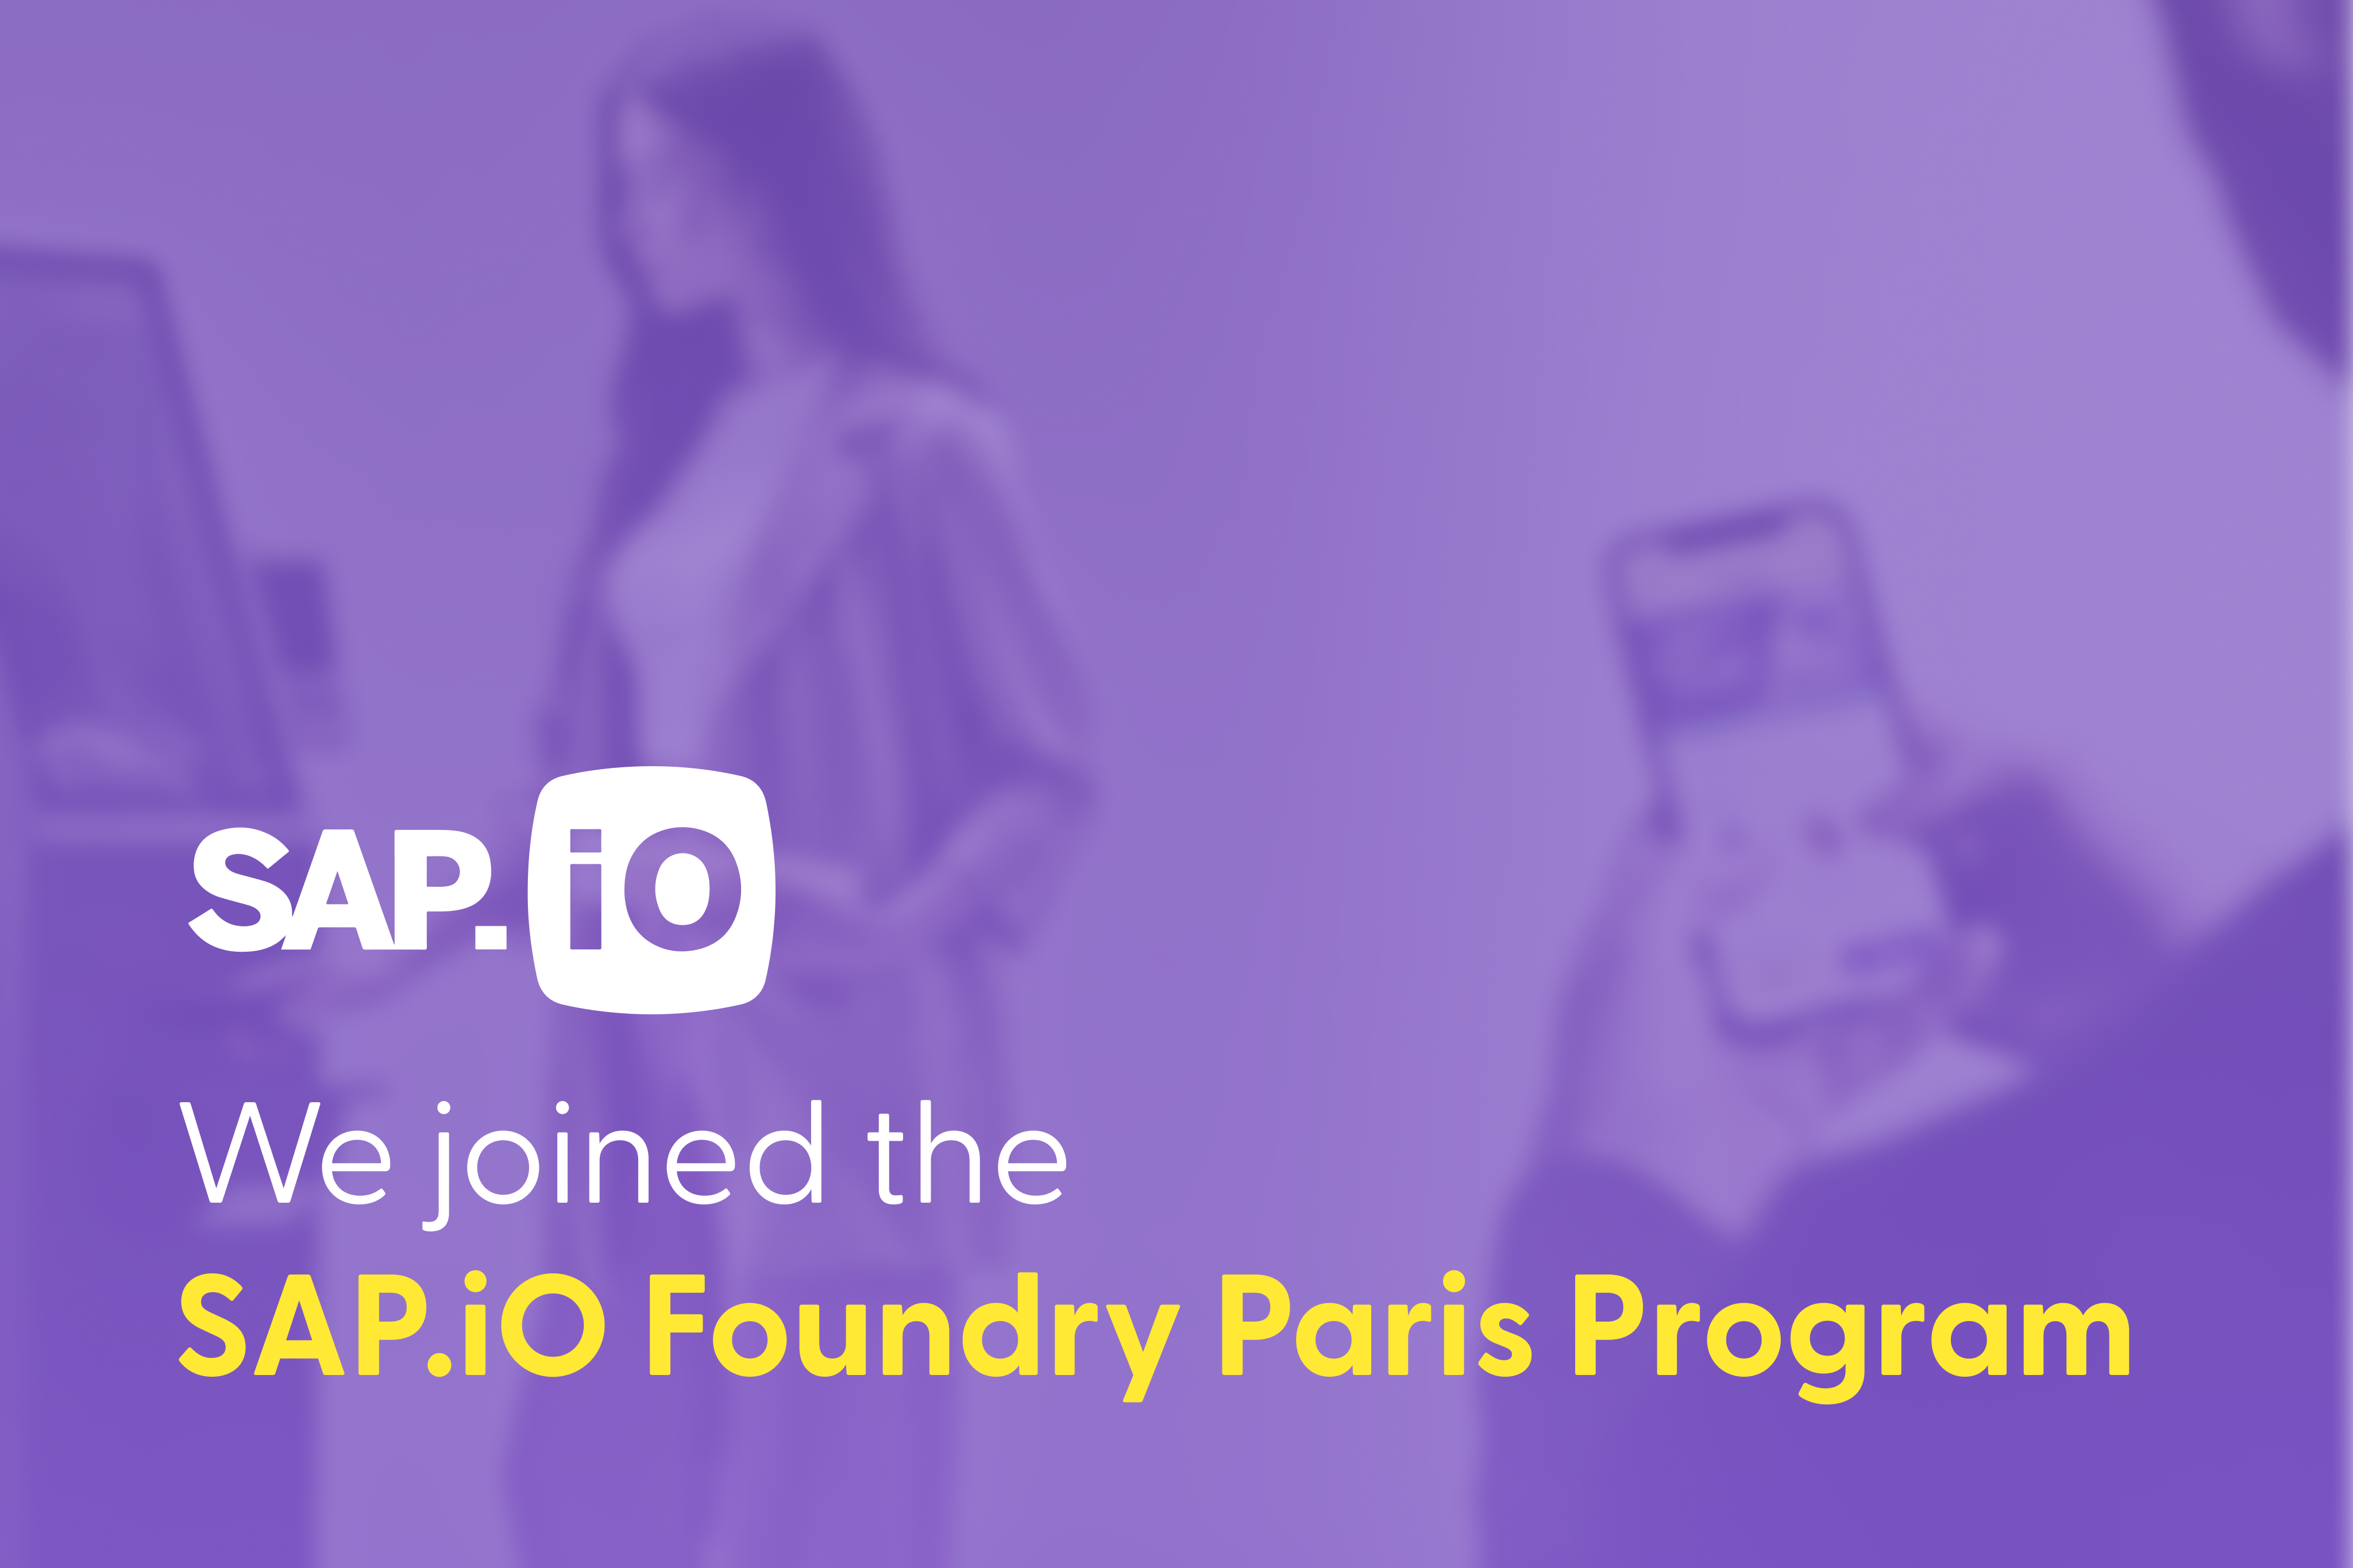 SAP.iO – We joined the SAP.iO Foundry Paris Program